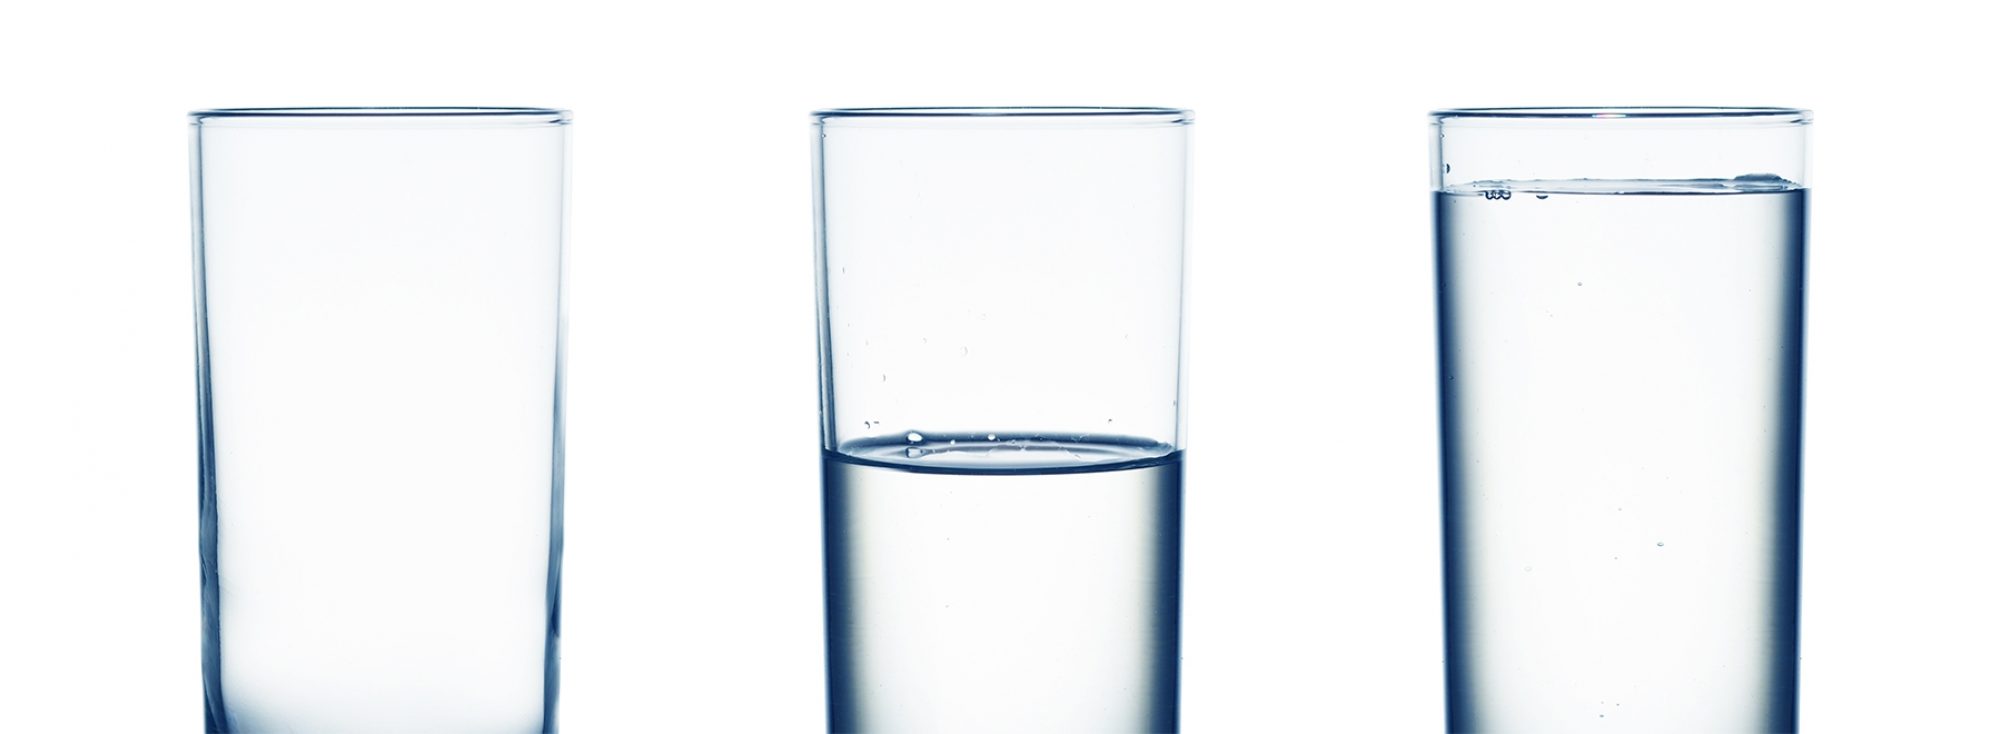 Alandsbanken marknadssyn 2020 vatten glas